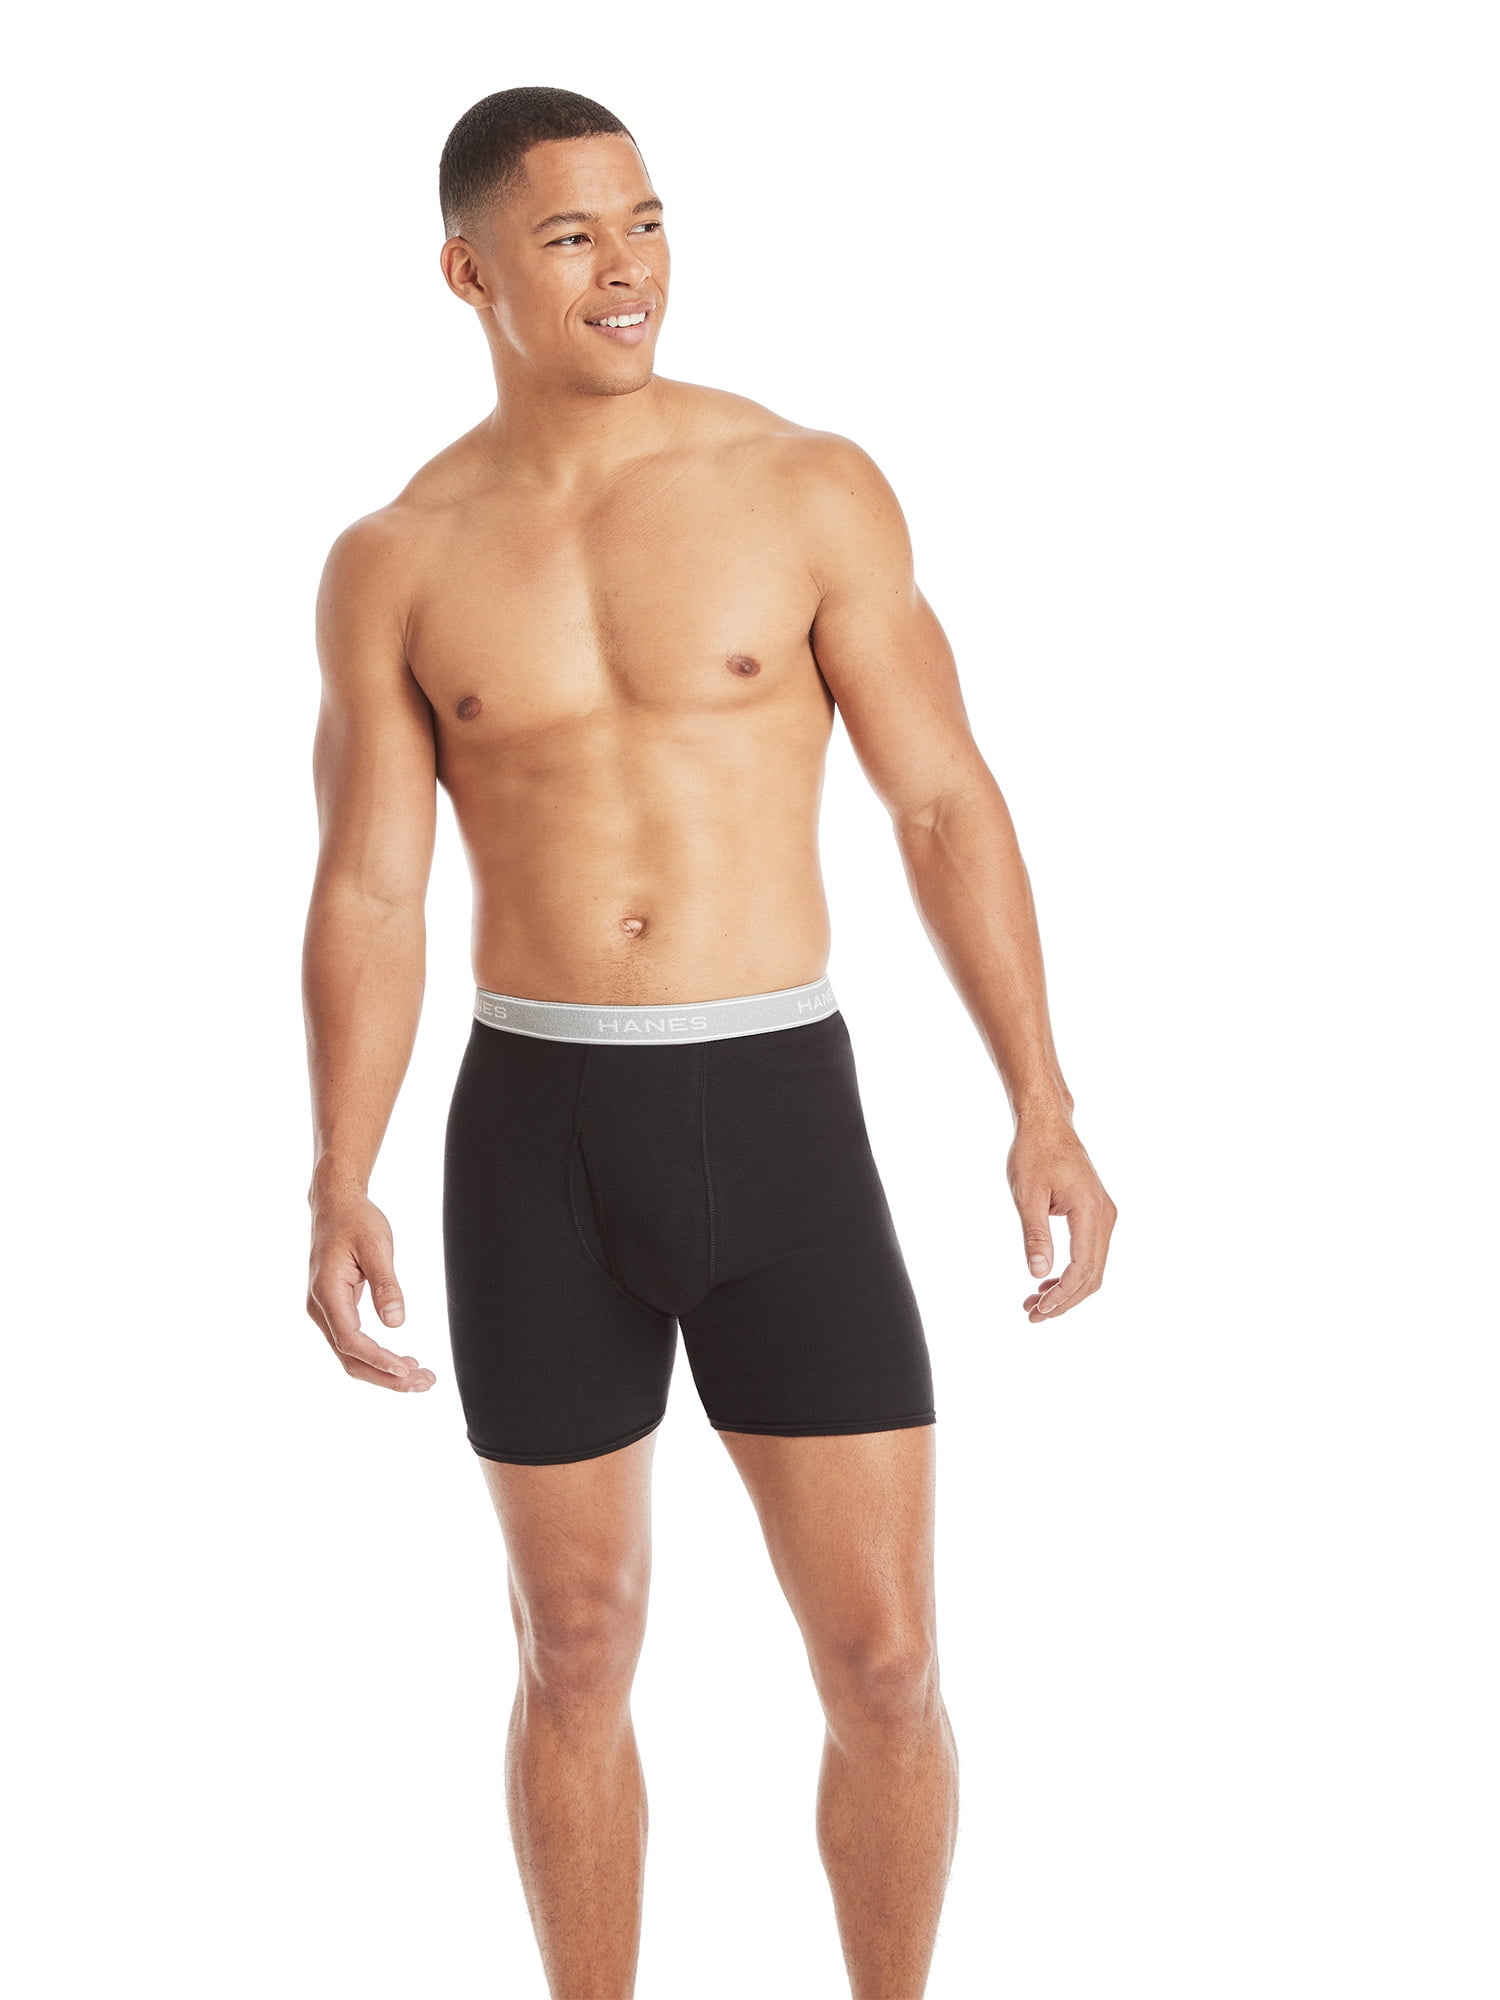 Hanes Our Most Comfortable Yet Grey Mens Underwear Boxer Briefs Size Medium  #2